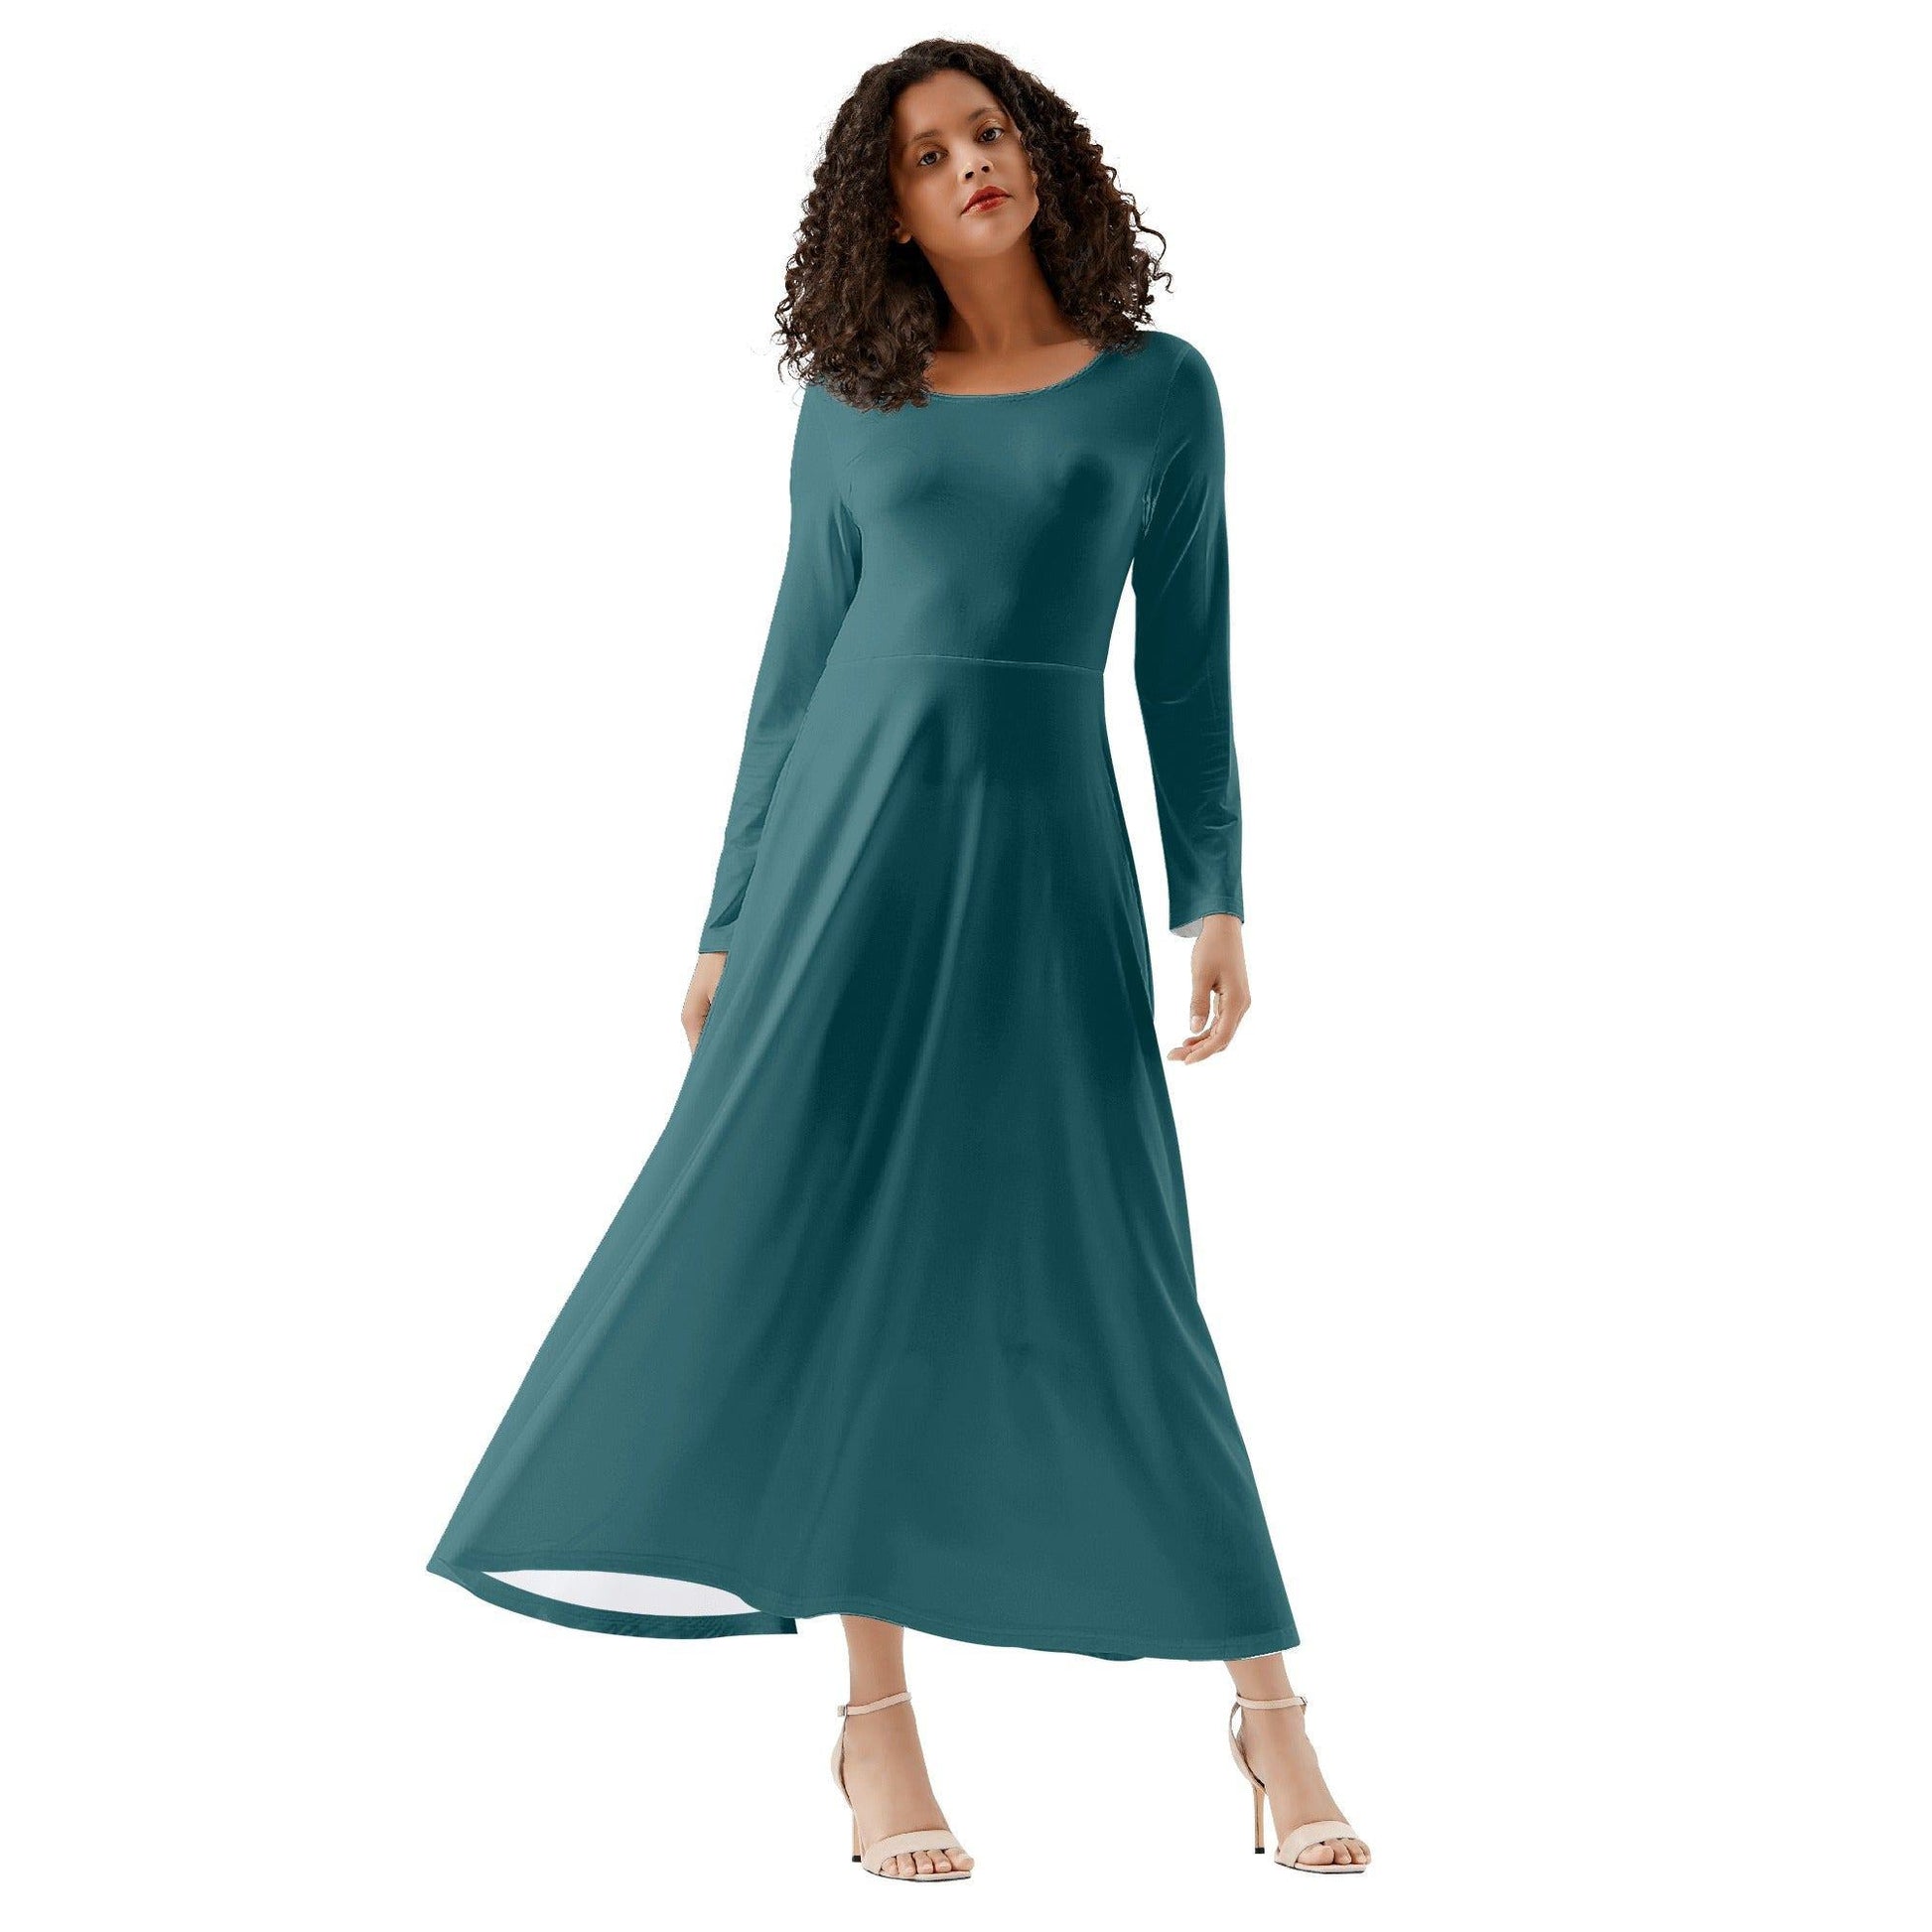 Sherpa Blue Long Sleeve Dress -- Sherpa Blue Long Sleeve Dress - undefined Long Sleeve Dress | JLR Design